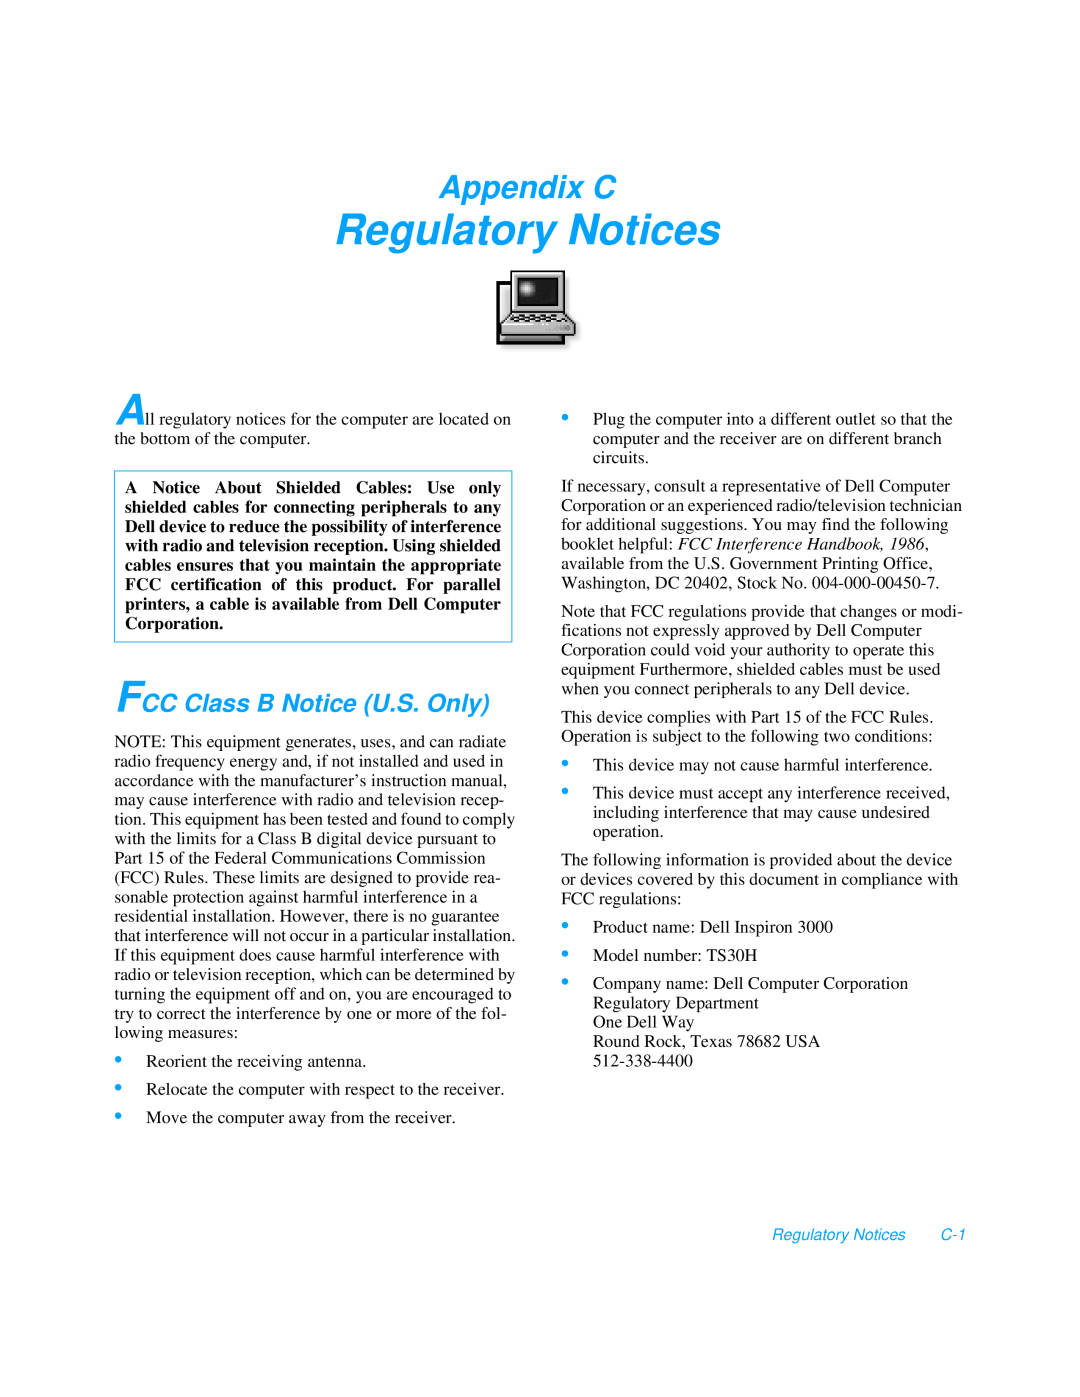 Dell 3000 manual Regulatory Notices, Appendix C, FCC Class B Notice U.S. Only 